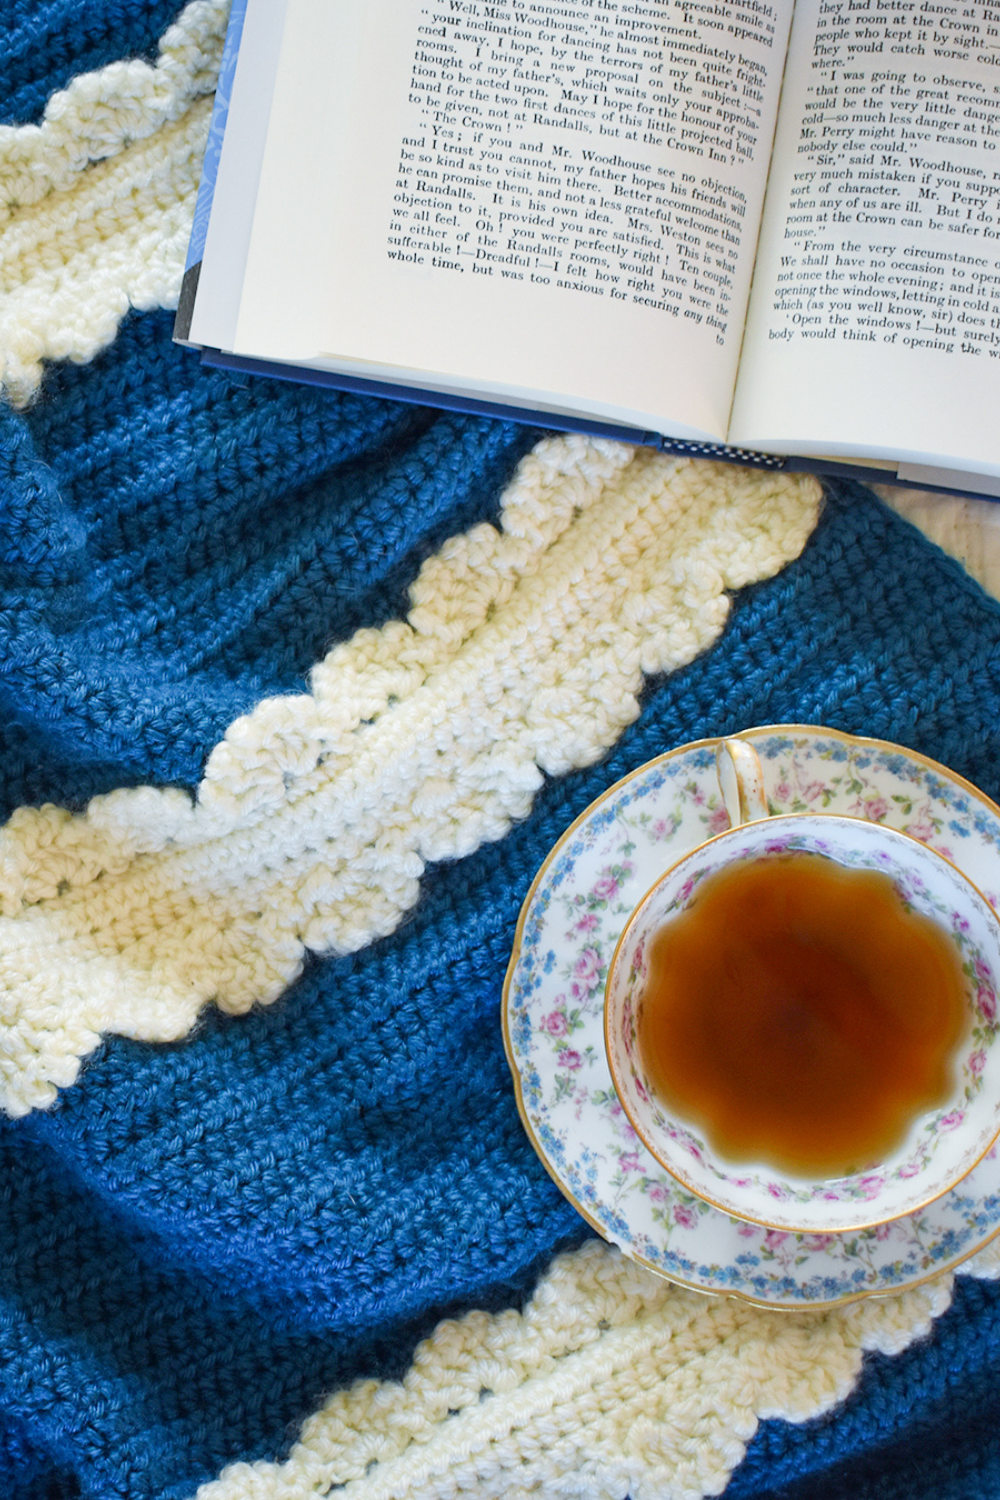 The Donwell Blanket Crochet Pattern